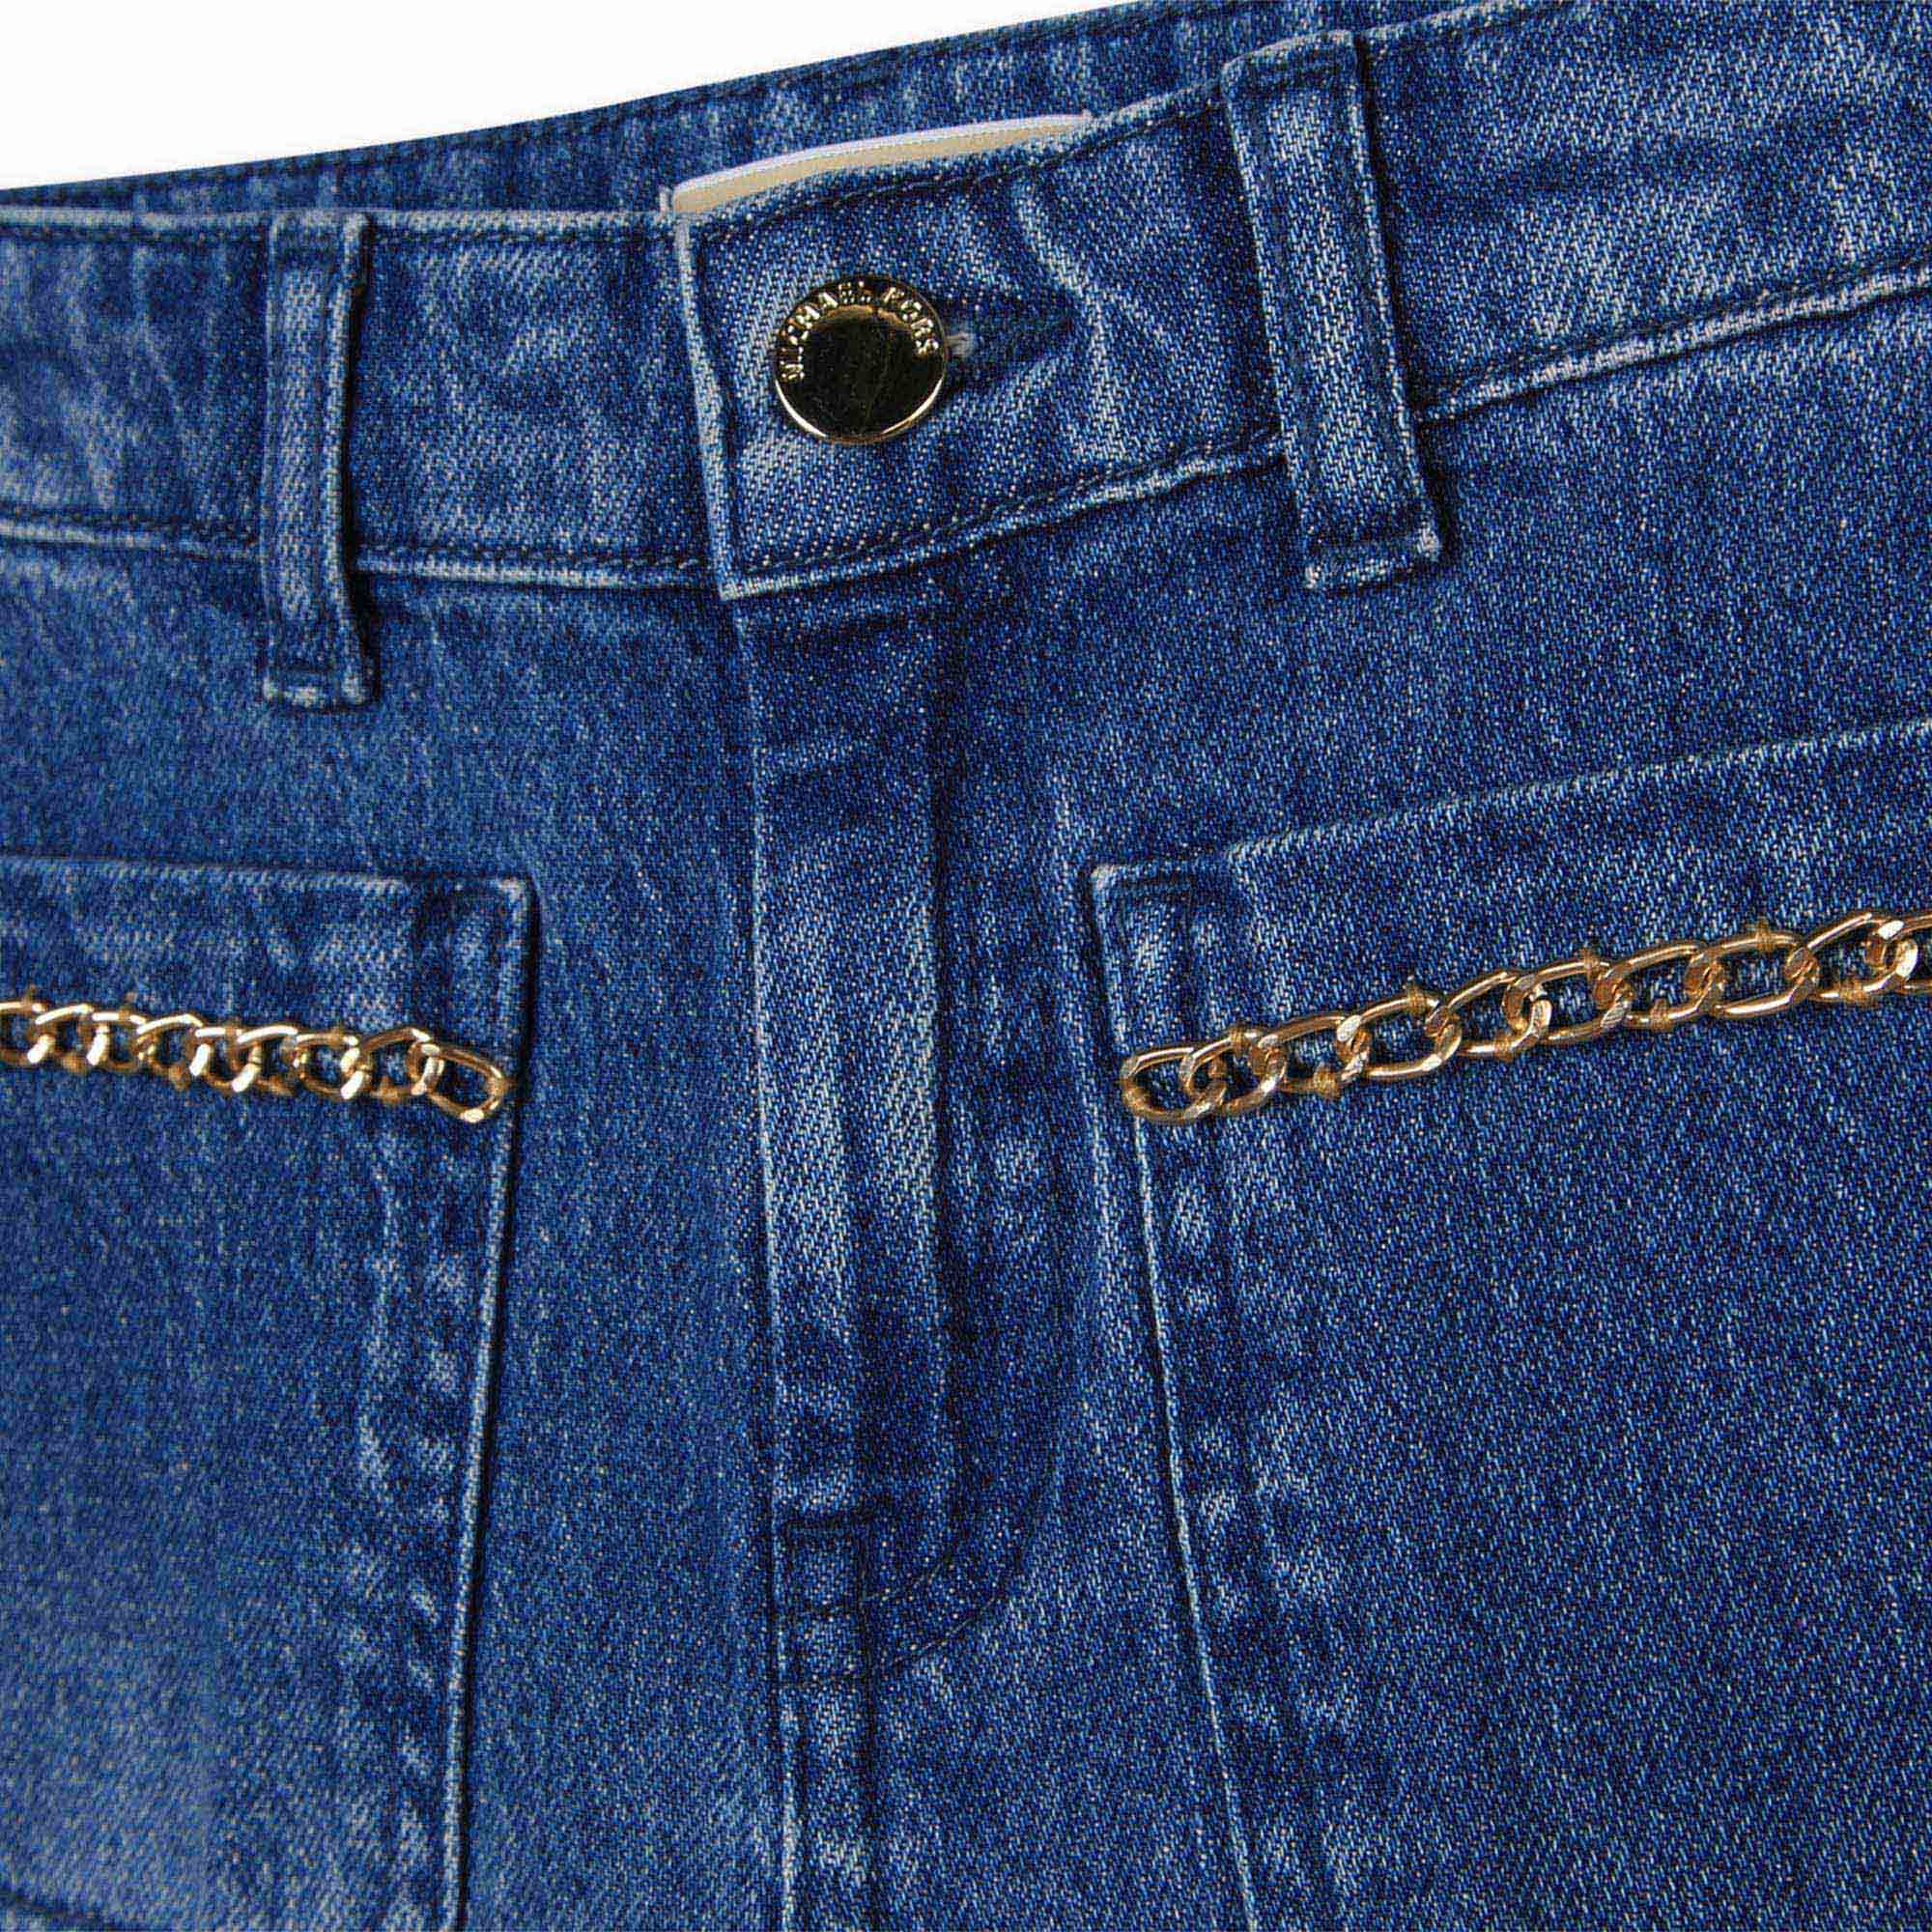 Cotton jeans MICHAEL KORS for GIRL